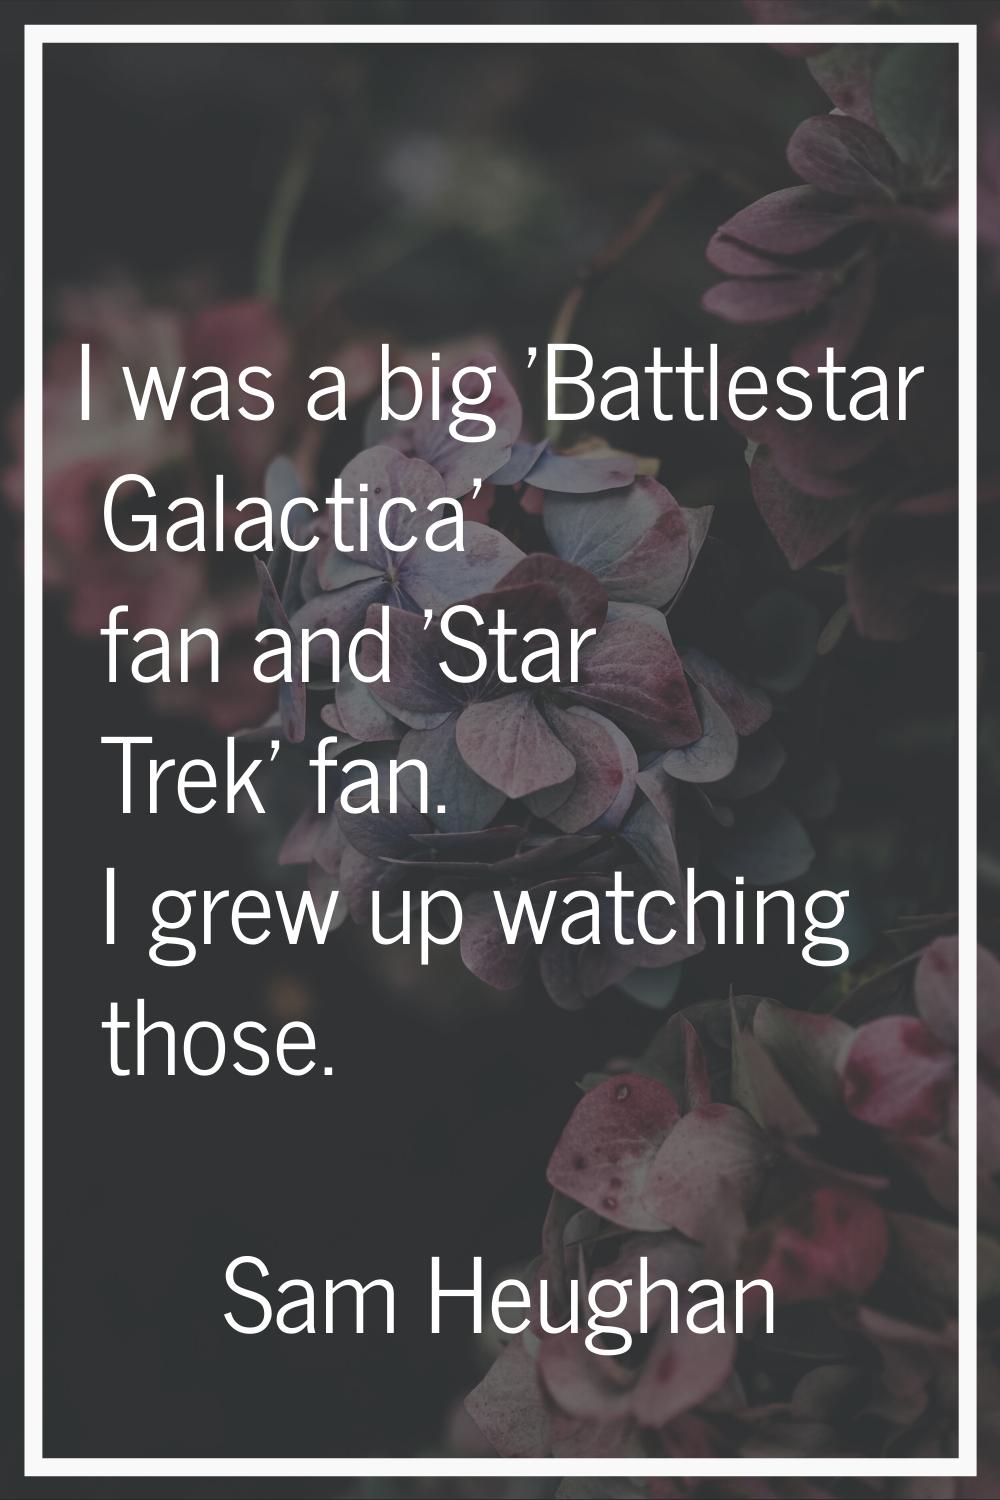 I was a big 'Battlestar Galactica' fan and 'Star Trek' fan. I grew up watching those.